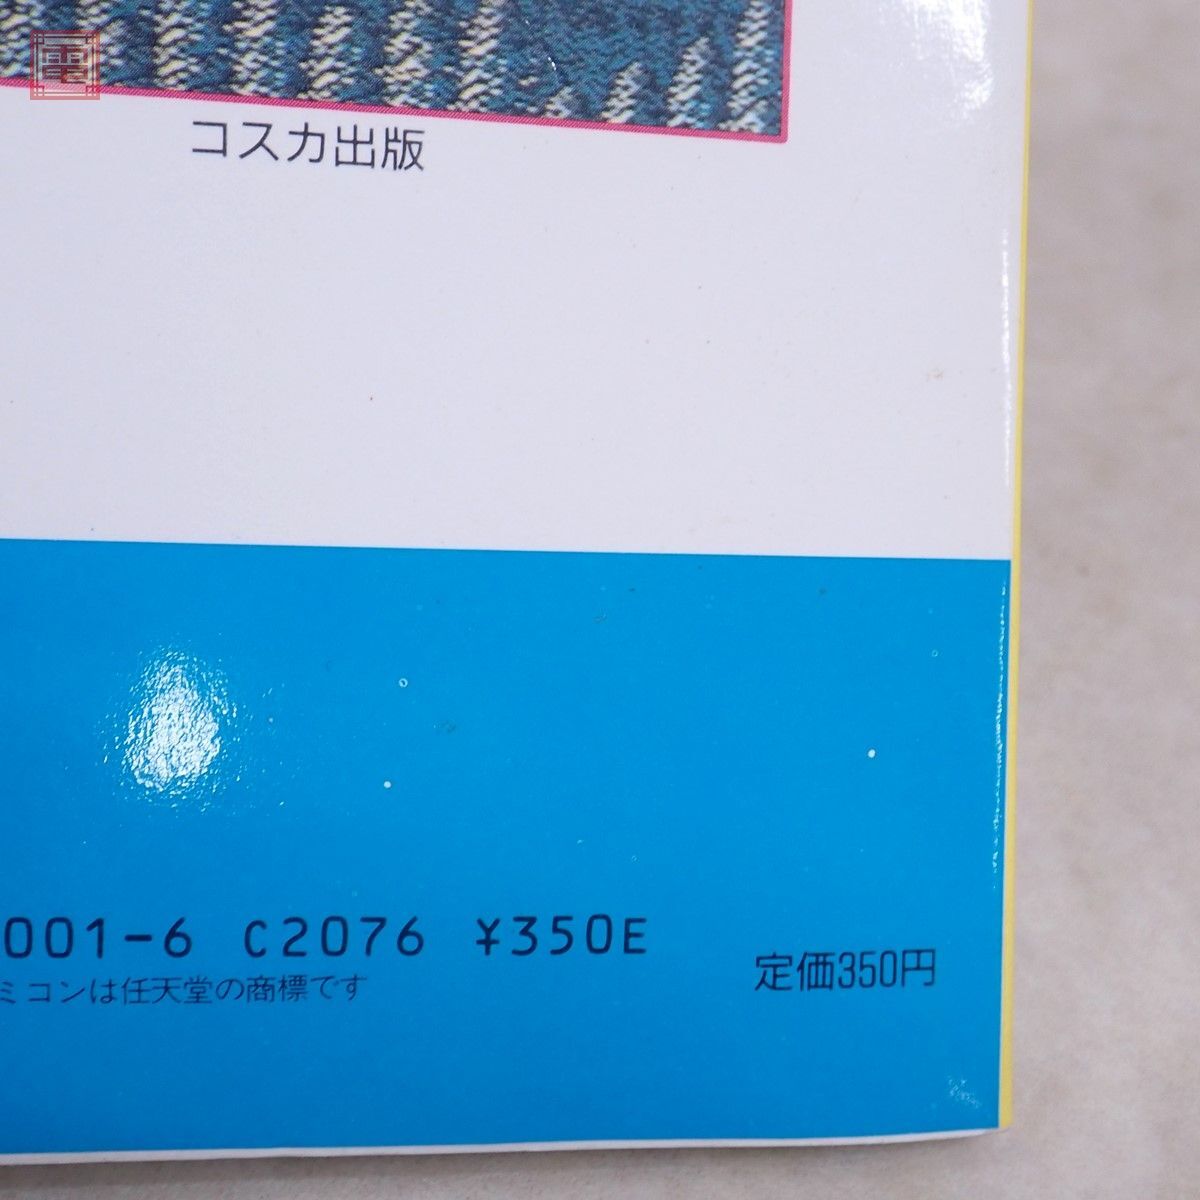  capture book FC Famicom demon castle gong kyula.peki capture book ko ska publish Konami KONAMI[PP